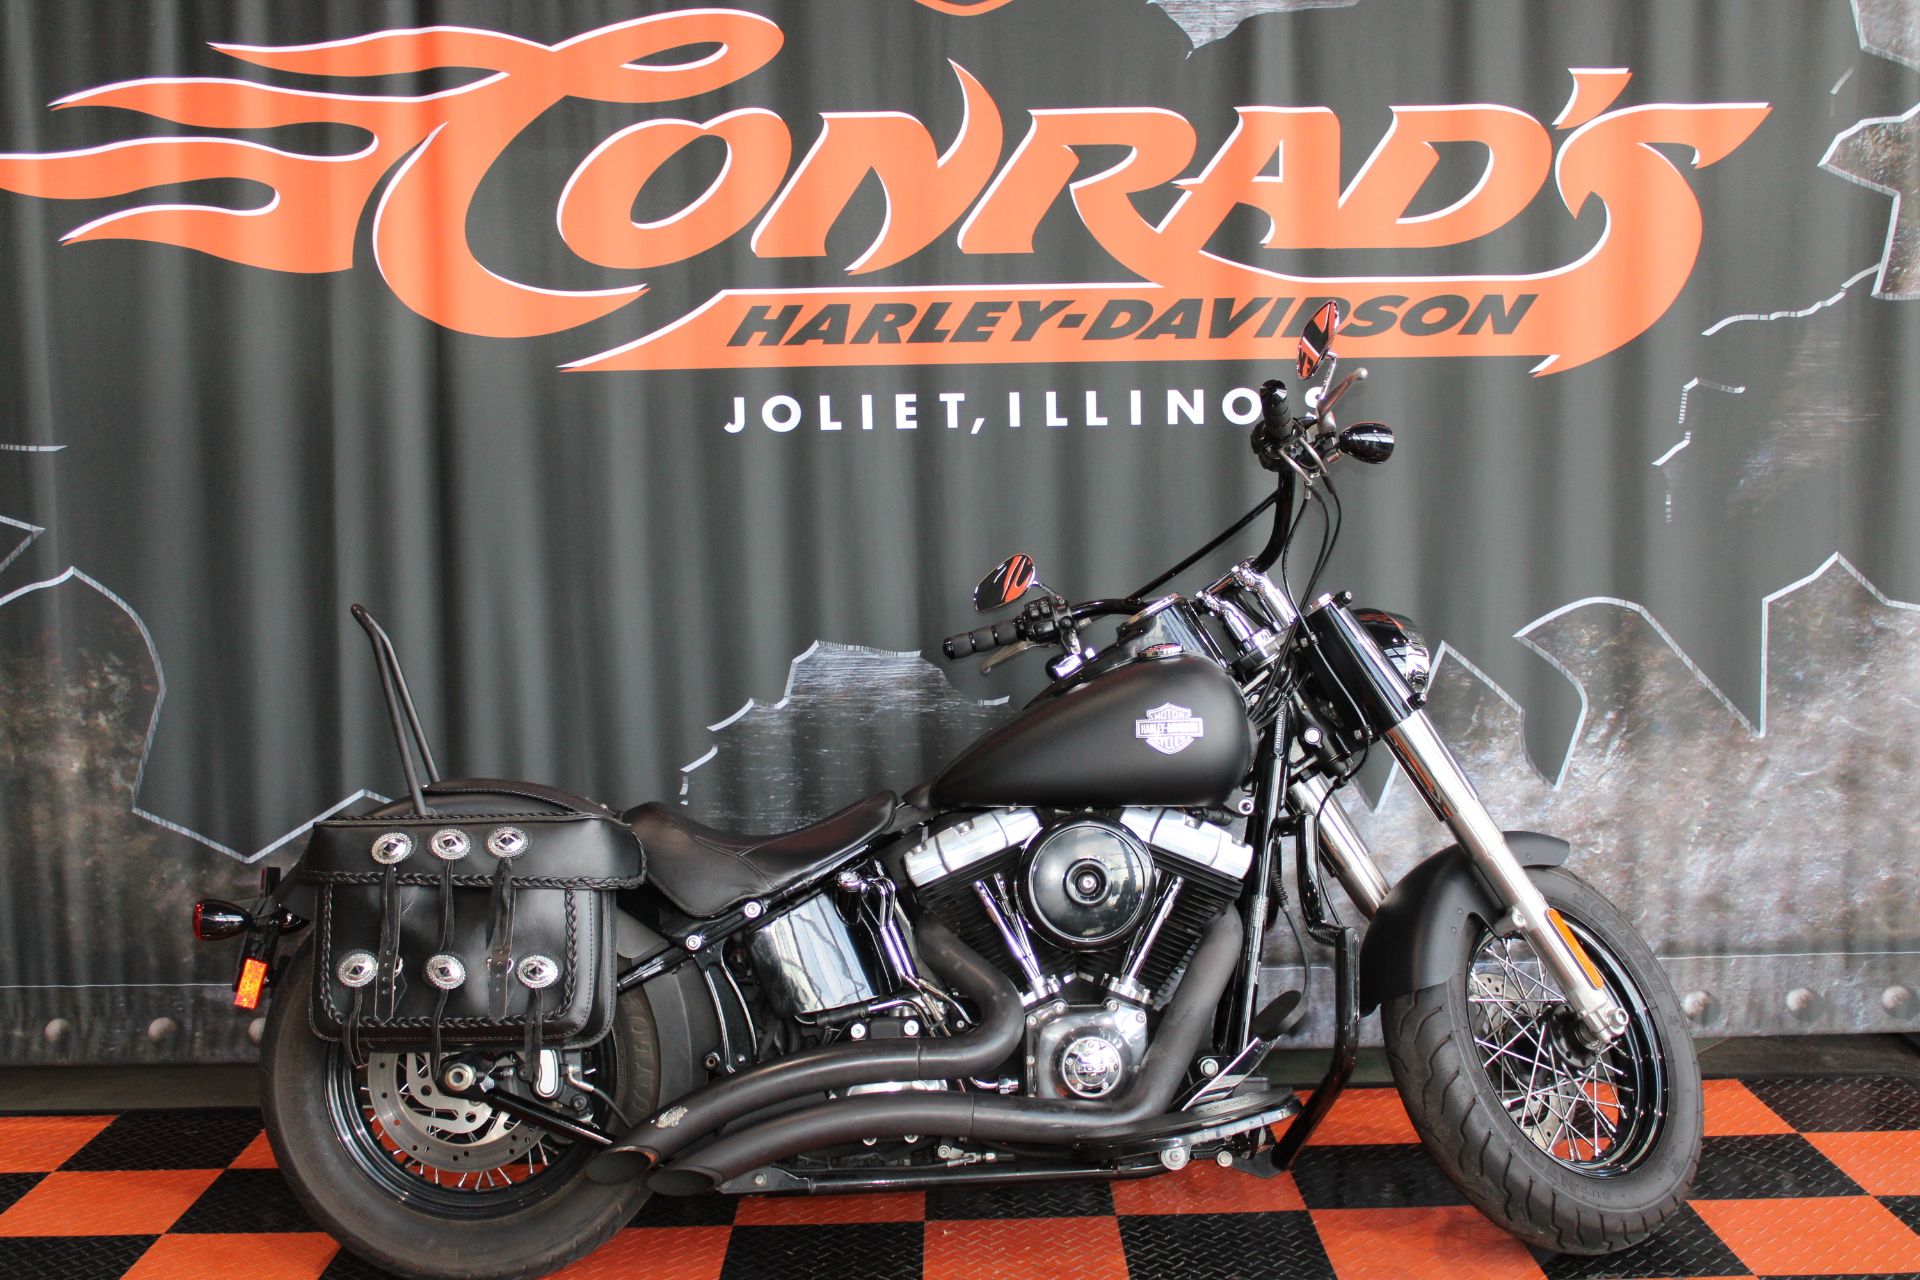 2013 Harley-Davidson Softail Slim® in Shorewood, Illinois - Photo 1